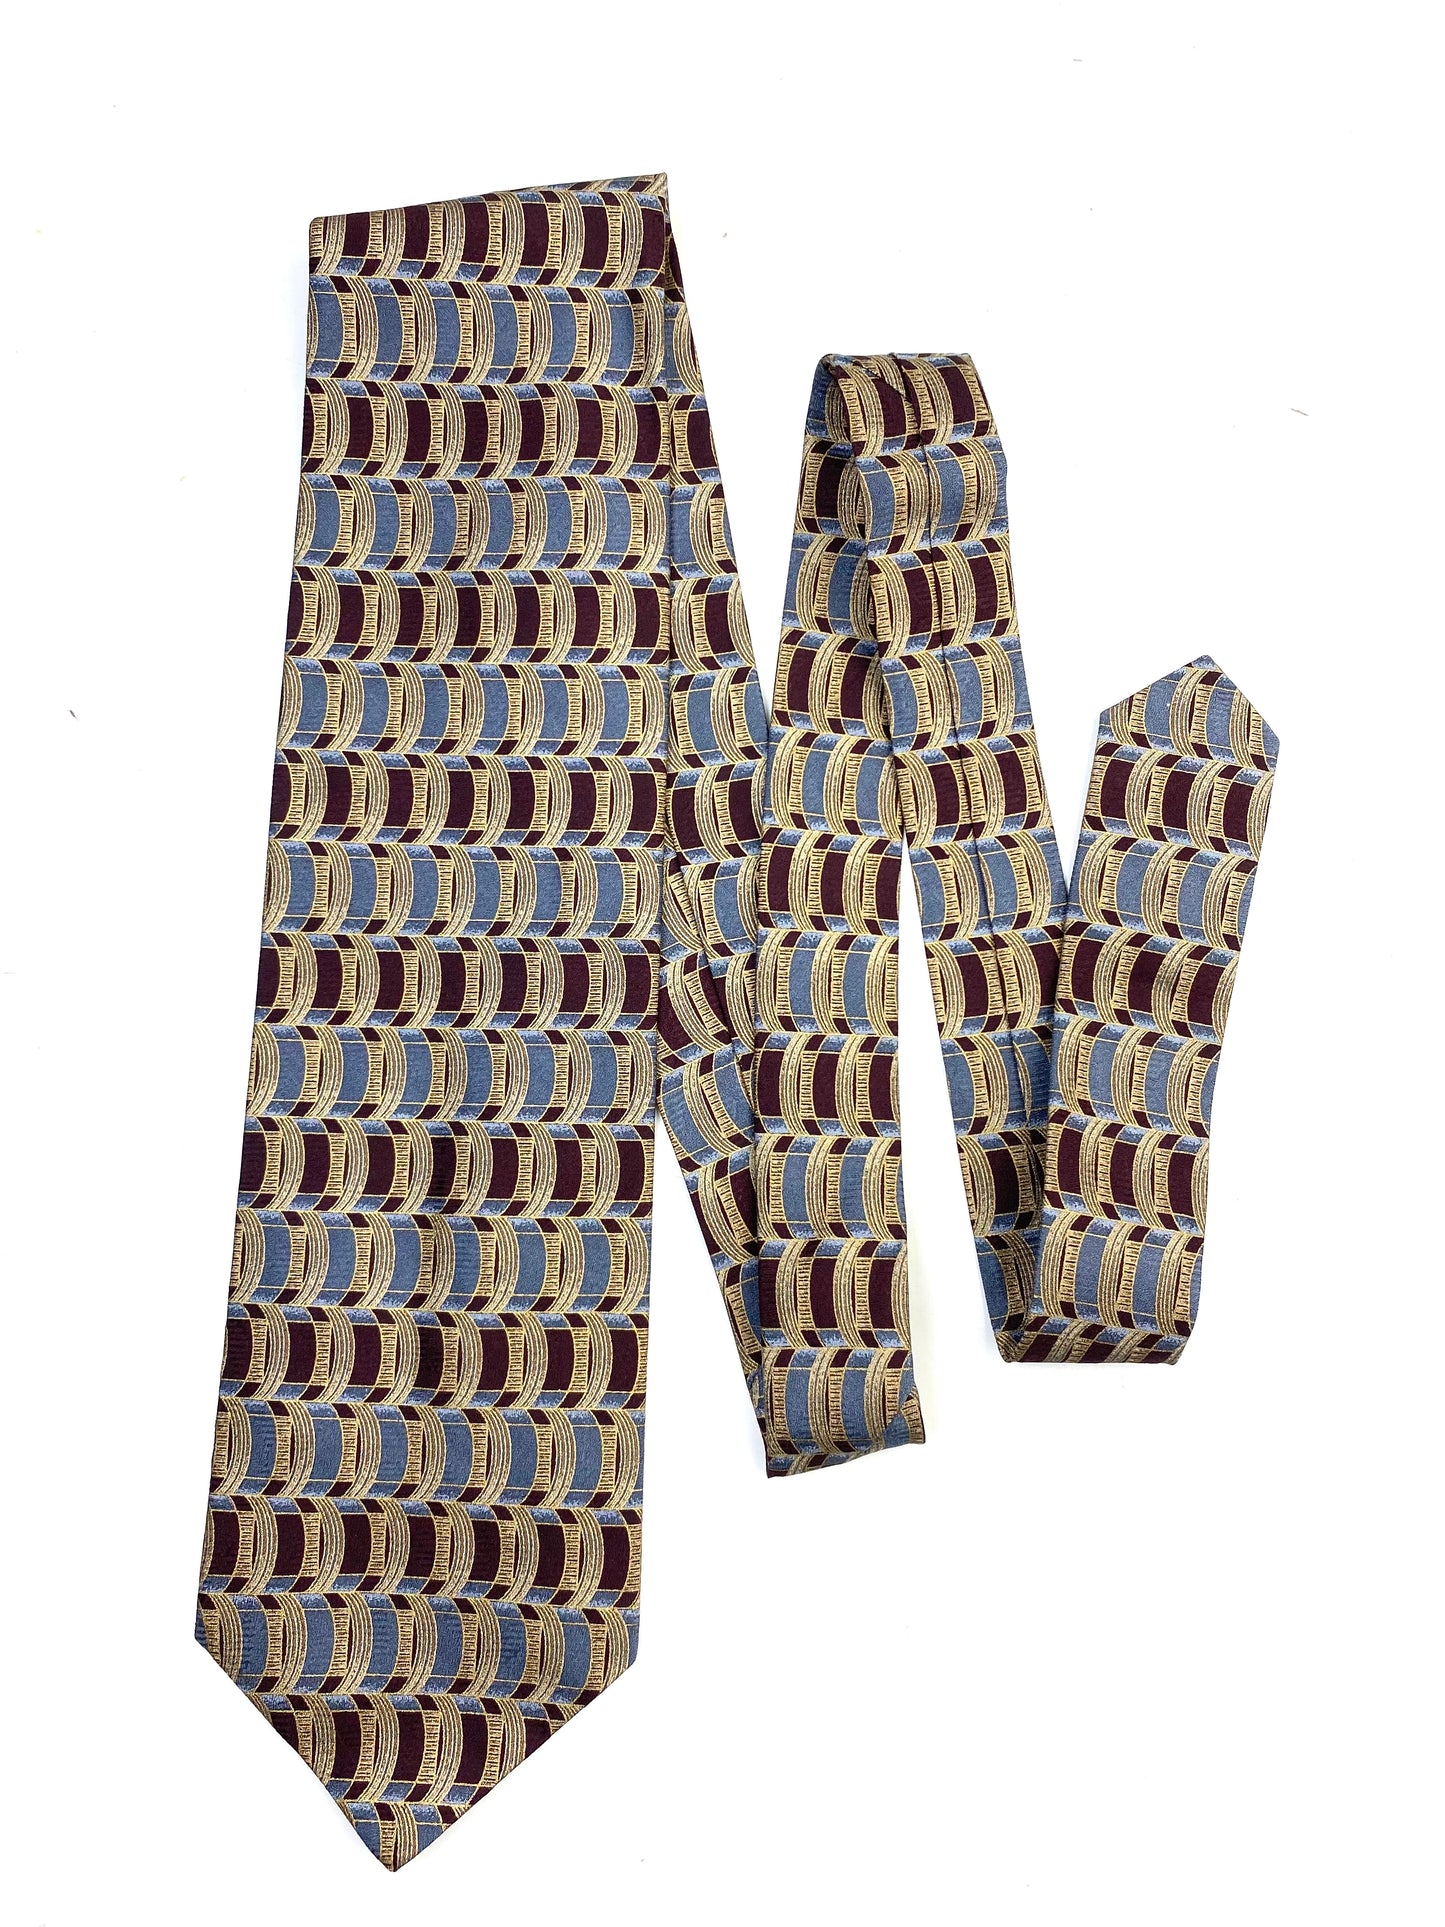 90s Deadstock Silk Necktie, Vintage Wine Blue Gold Geometric Pattern Tie, NOS